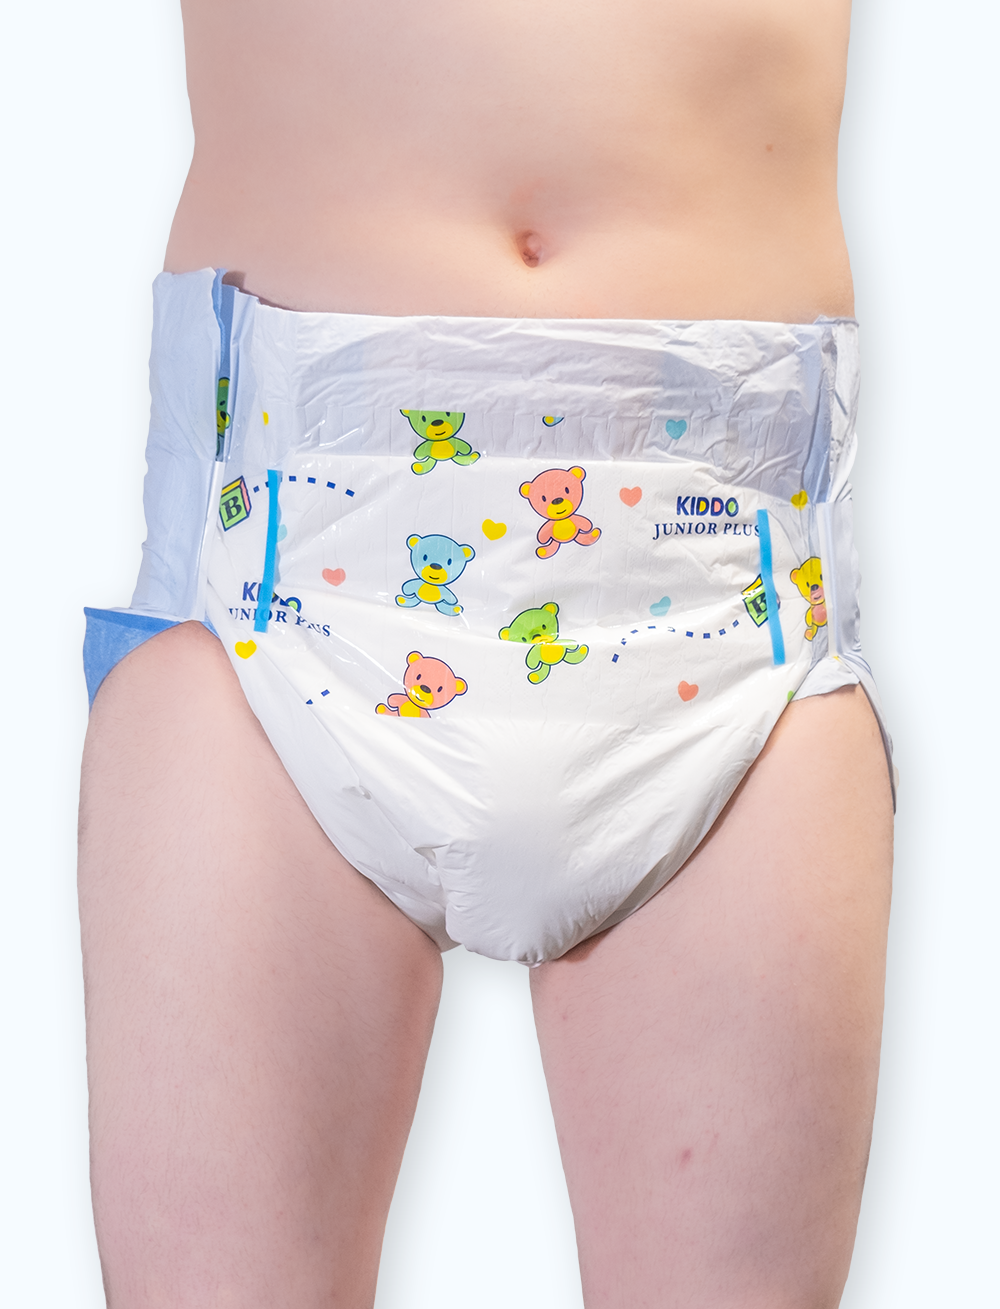 commercial ABDL Kiddo diaper Vintage Junior plus 